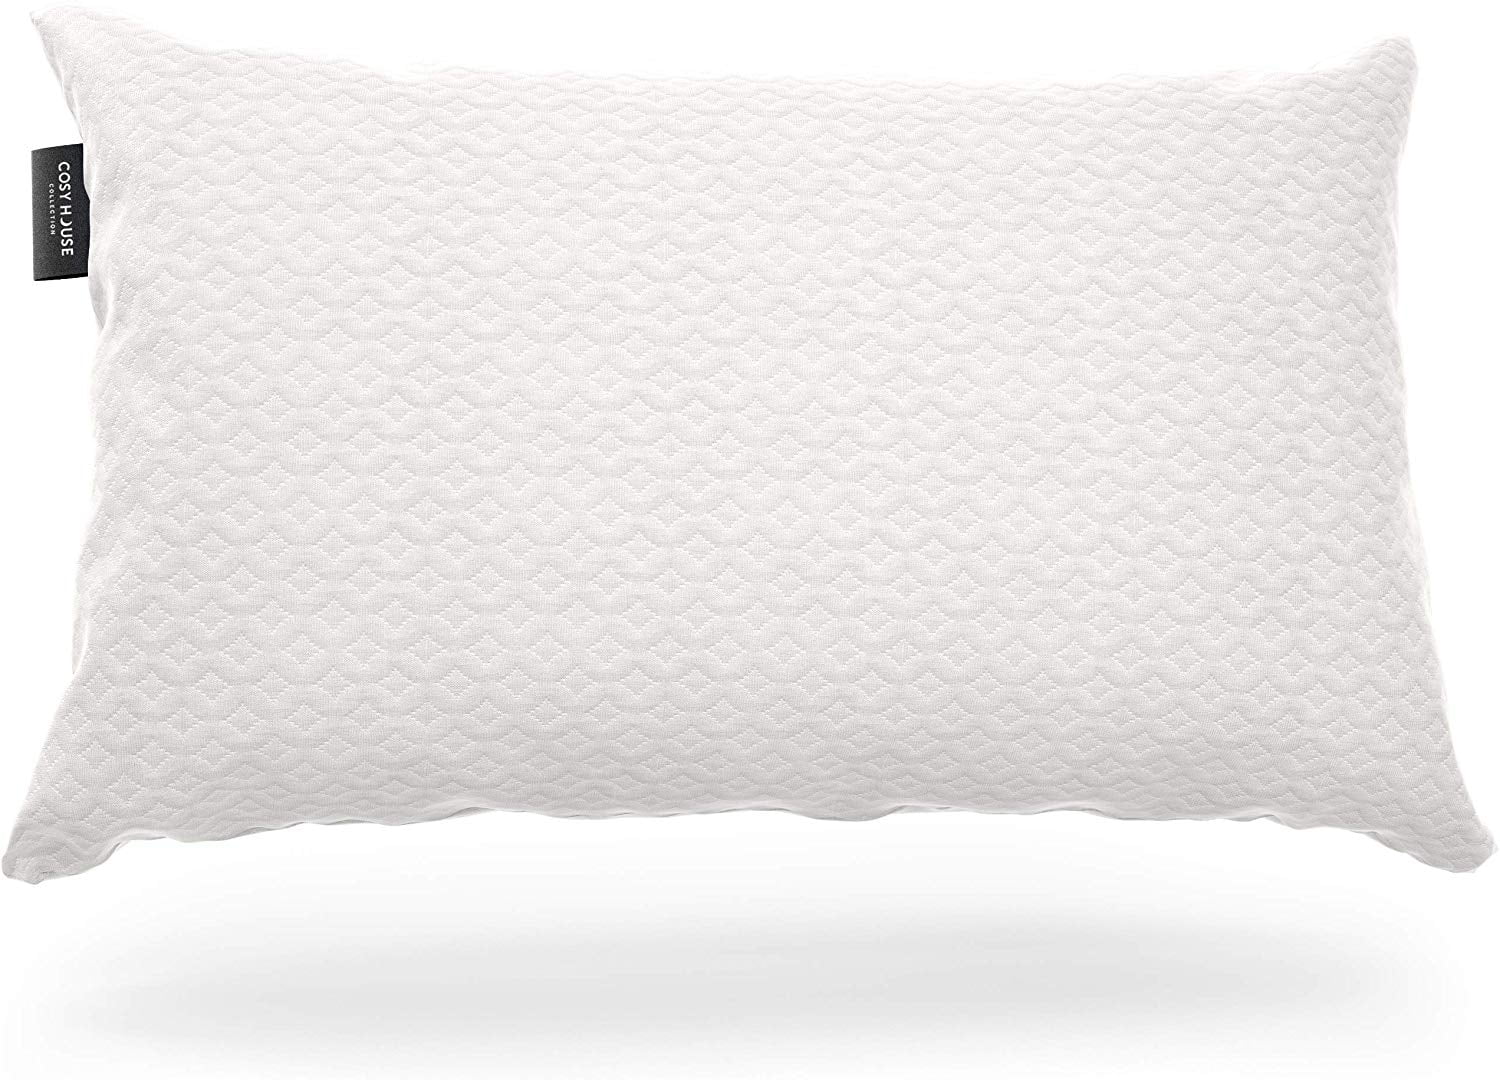 EASY REST Deluxe Shredded Memory Foam Pillow 18" x 27" Standard Size $59.95 MSRP 